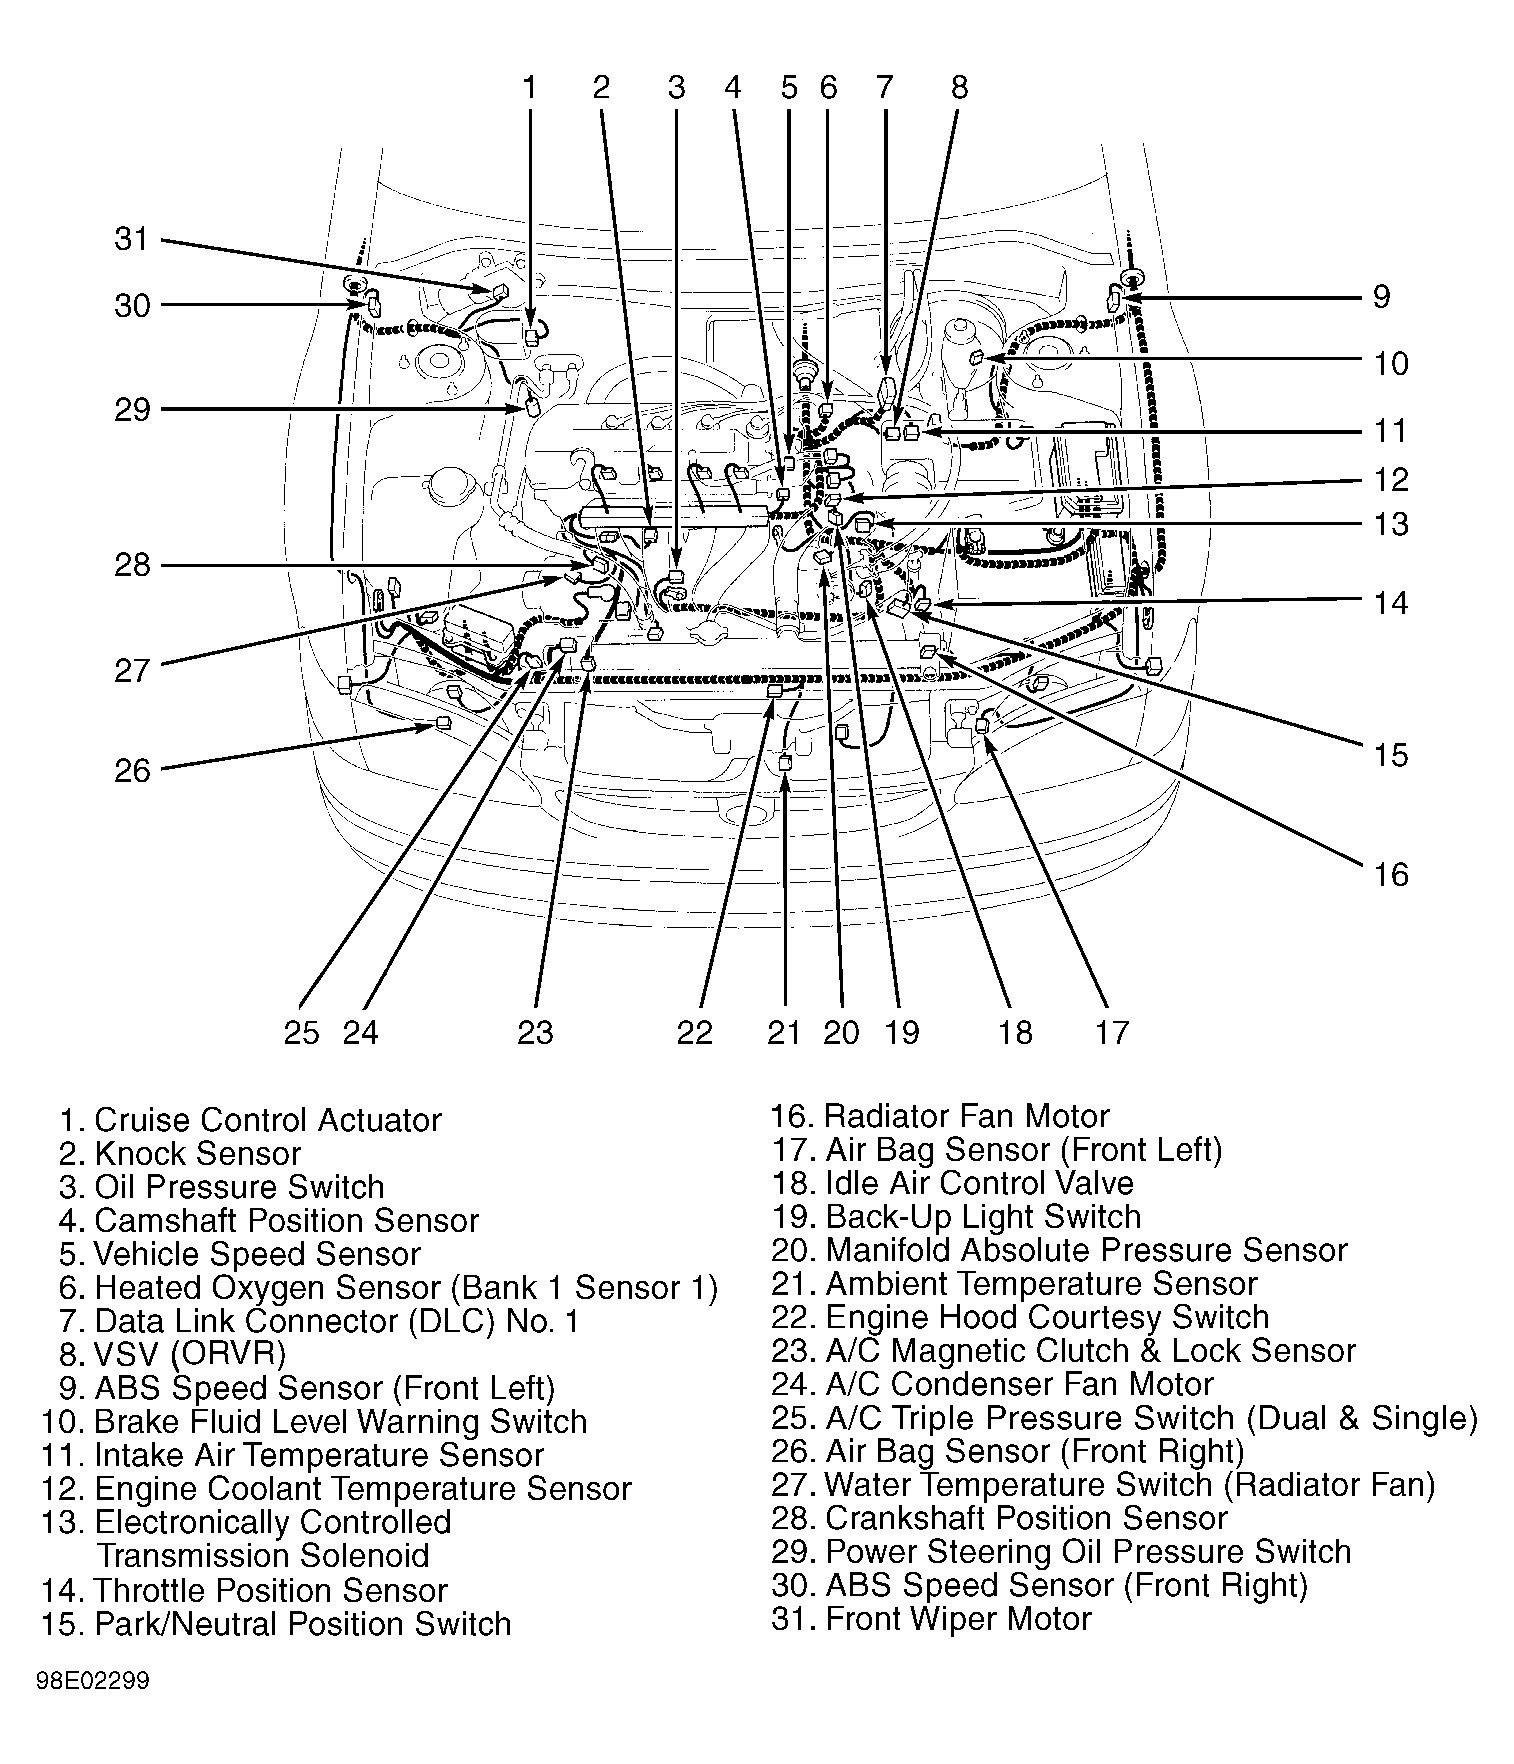 2002 toyota Tacoma Engine Diagram toyota Supra Engine Diagram toyota Wiring Diagrams Instructions Of 2002 toyota Tacoma Engine Diagram